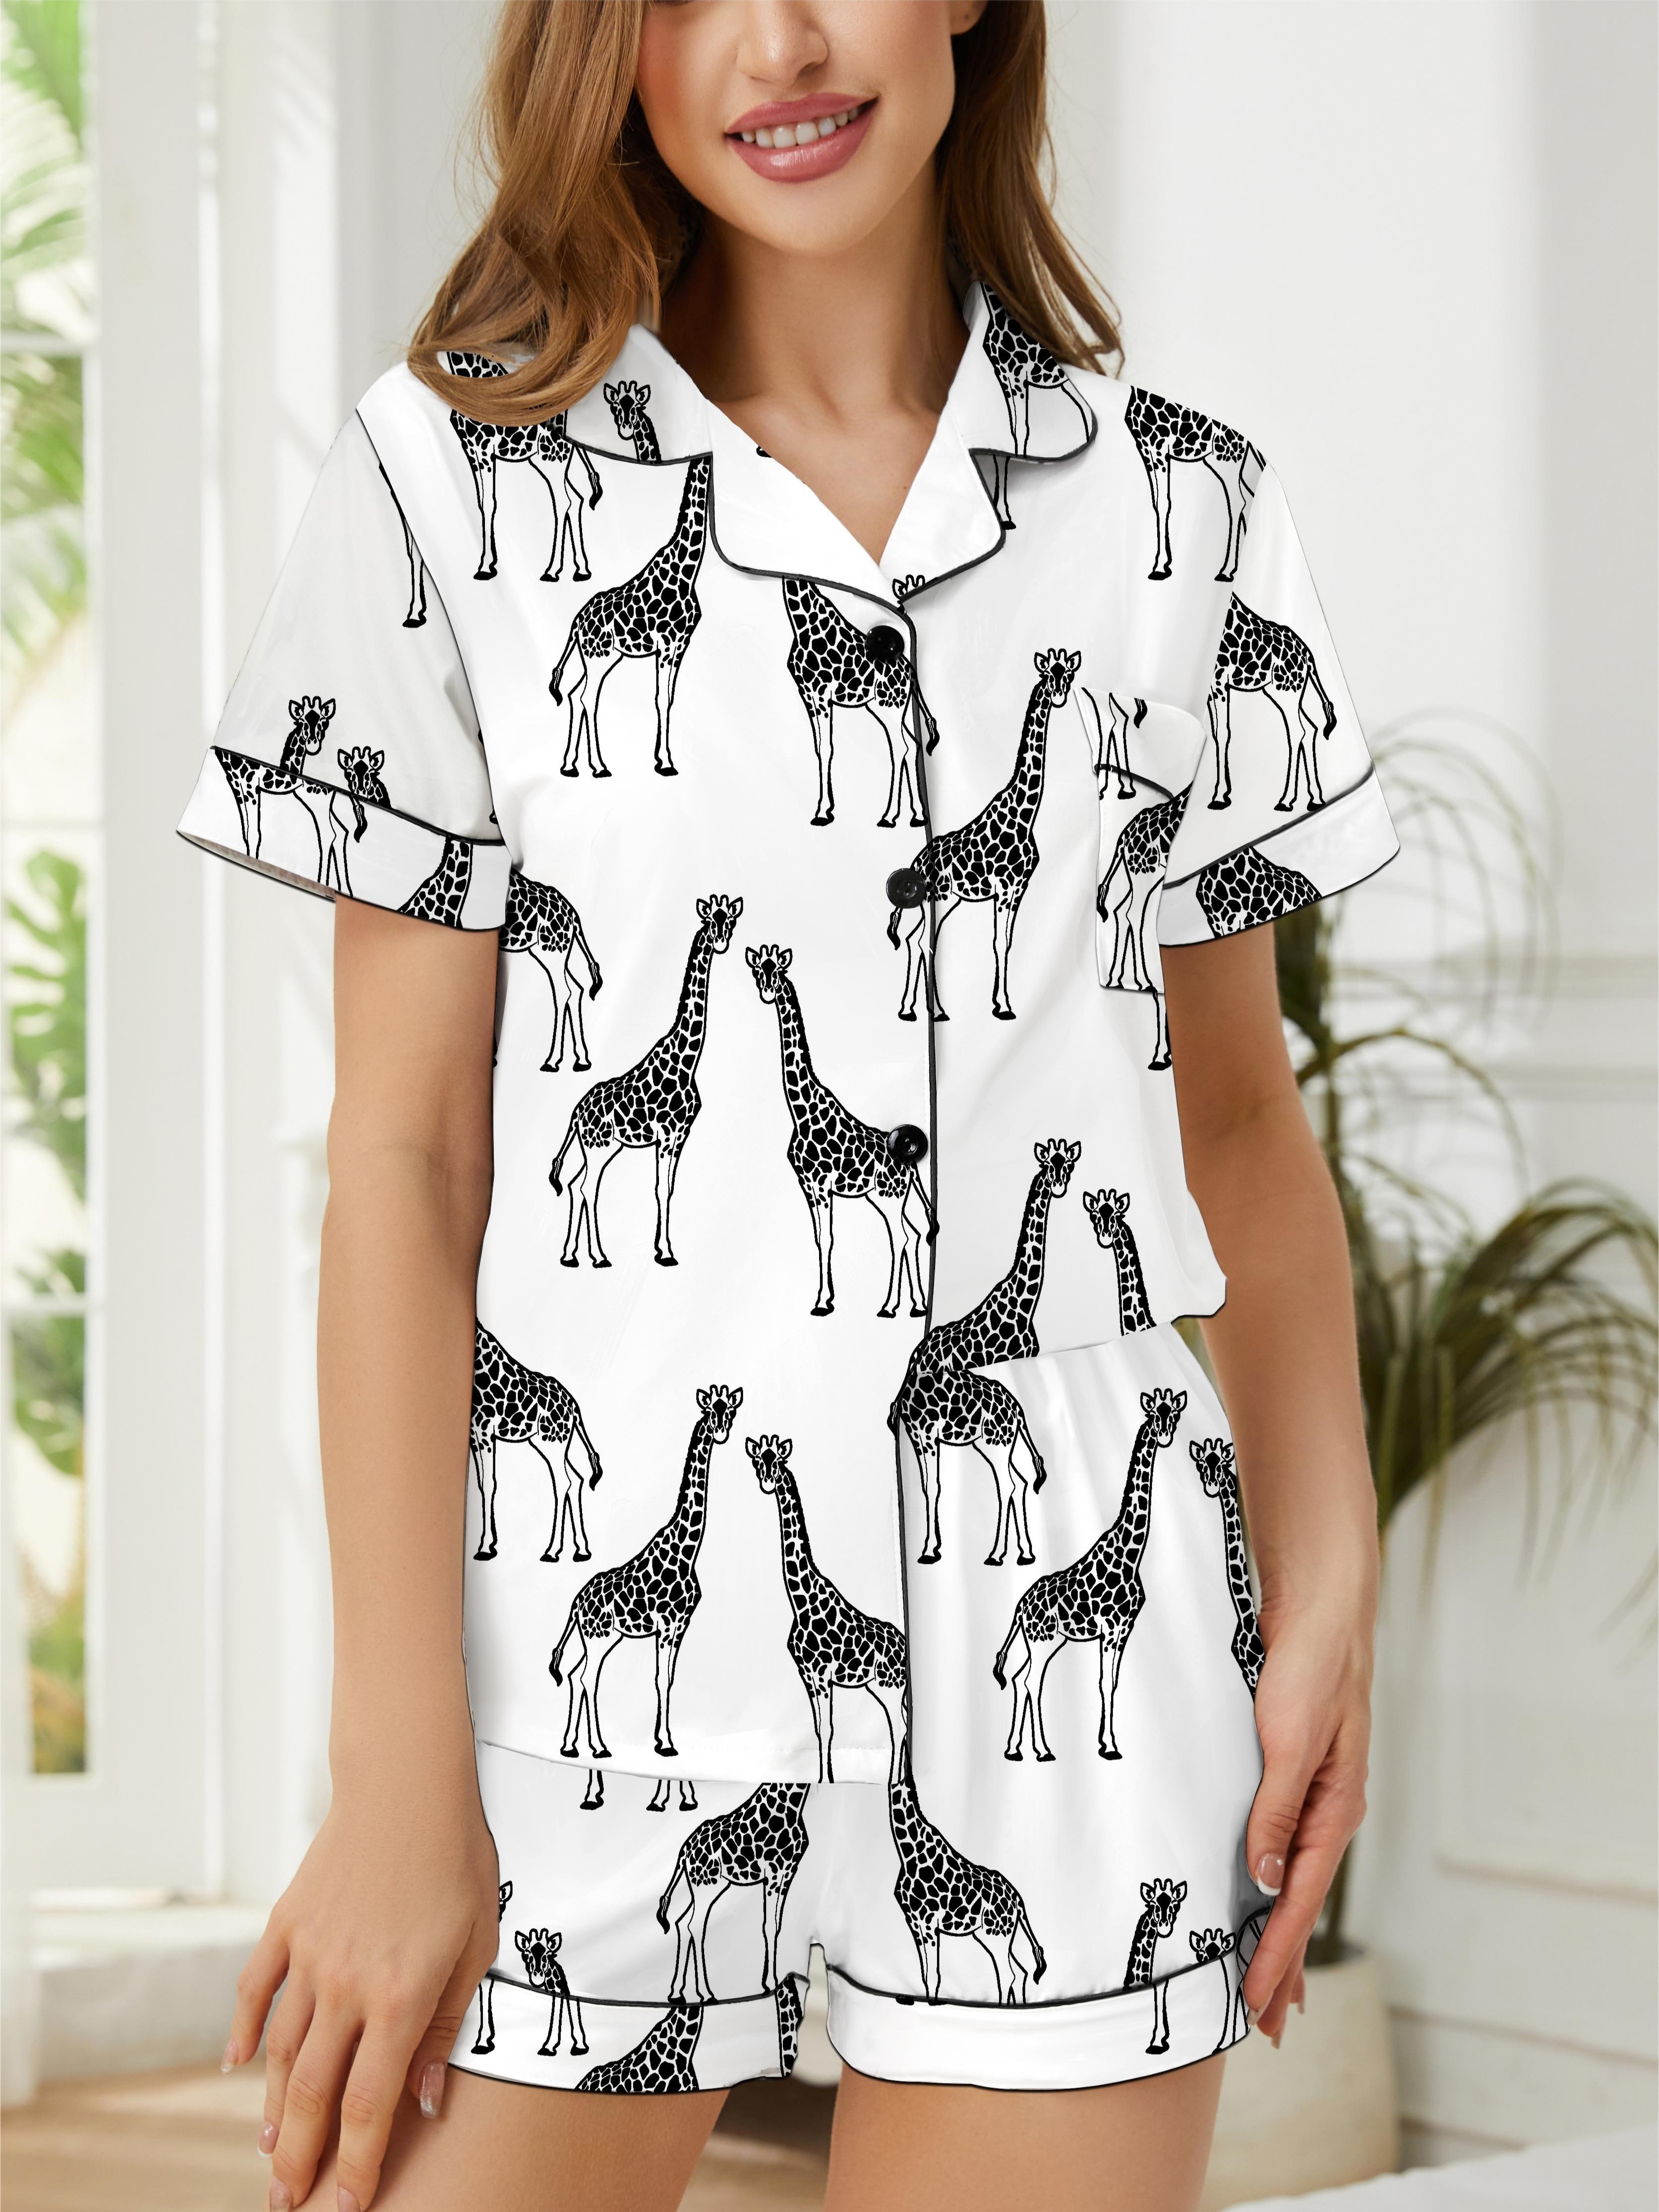 Our Girls Comfy Leggings Tshirt Set with a cute giraffe print is